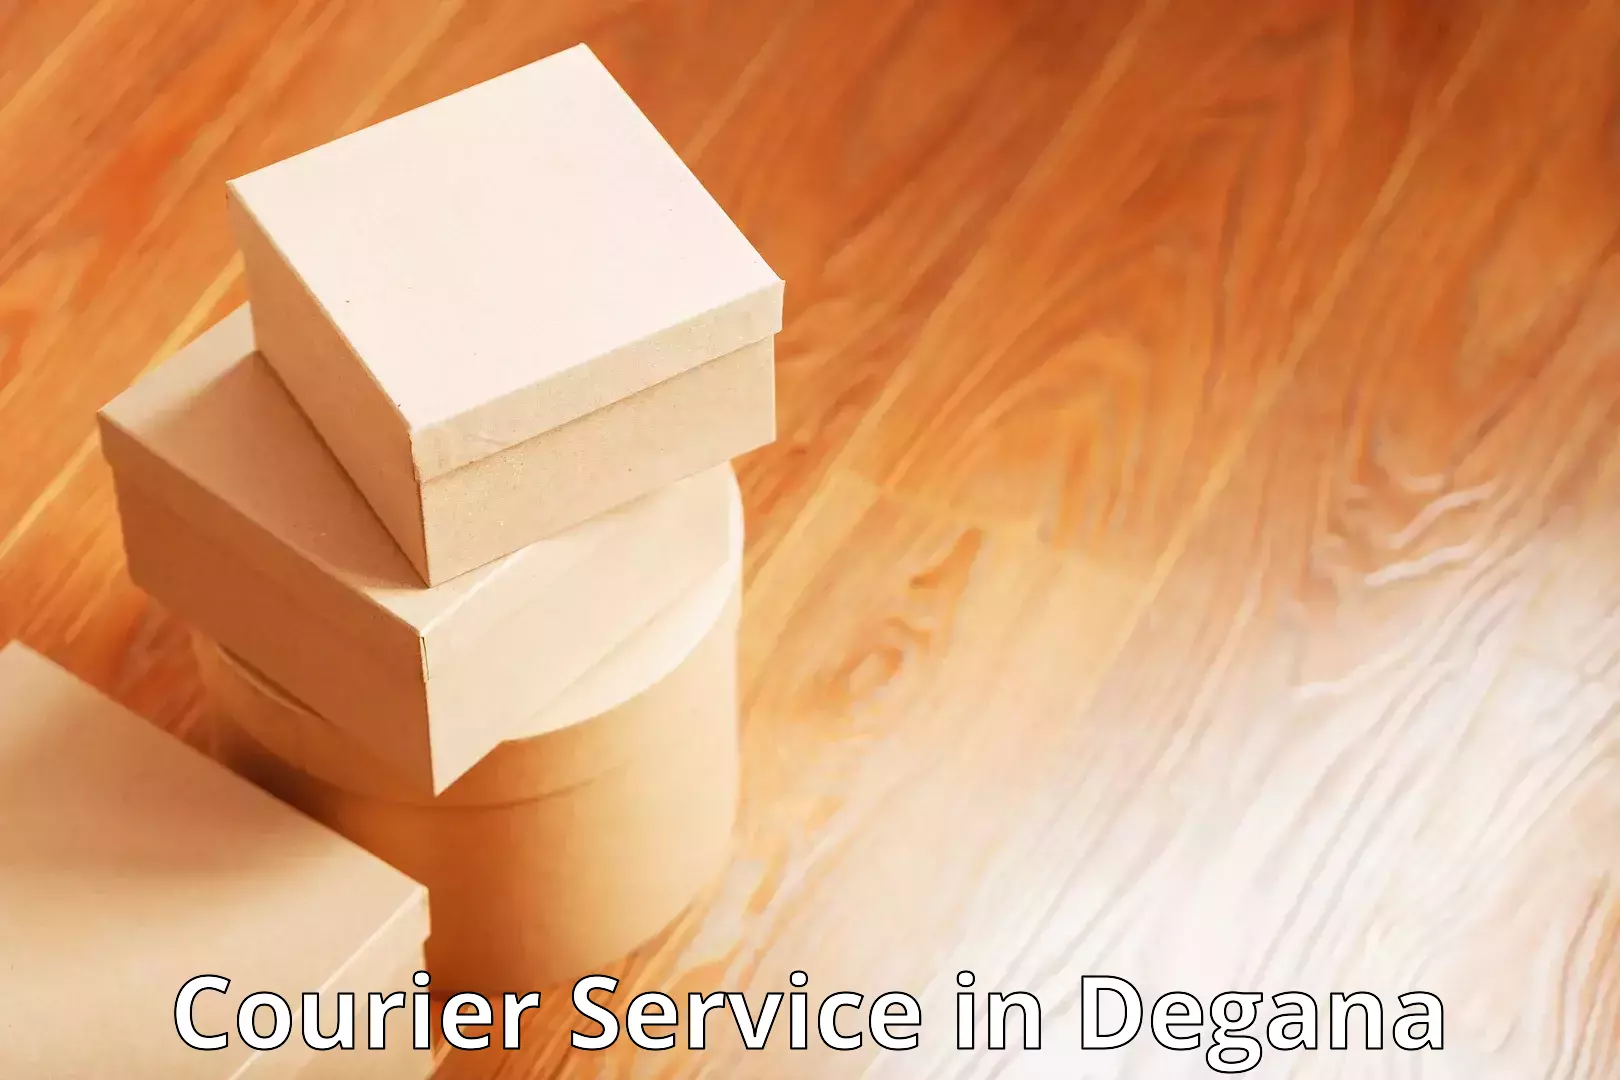 Flexible parcel services in Degana